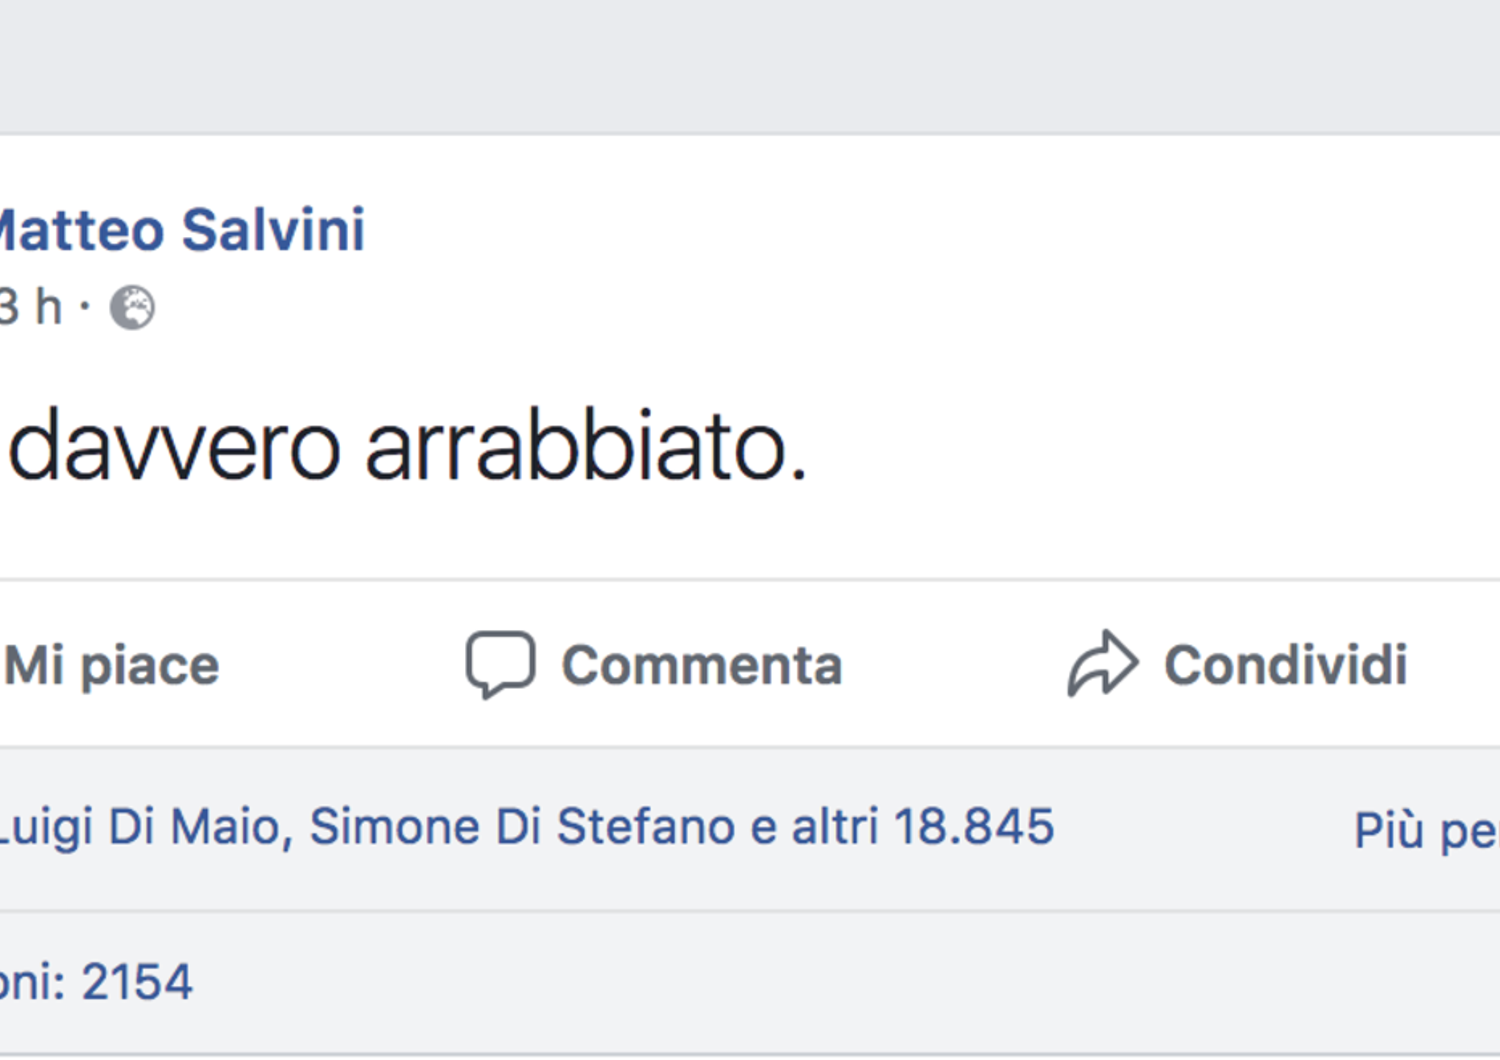 Uno screenshot dalla pagina Facebook di Matteo Salvini